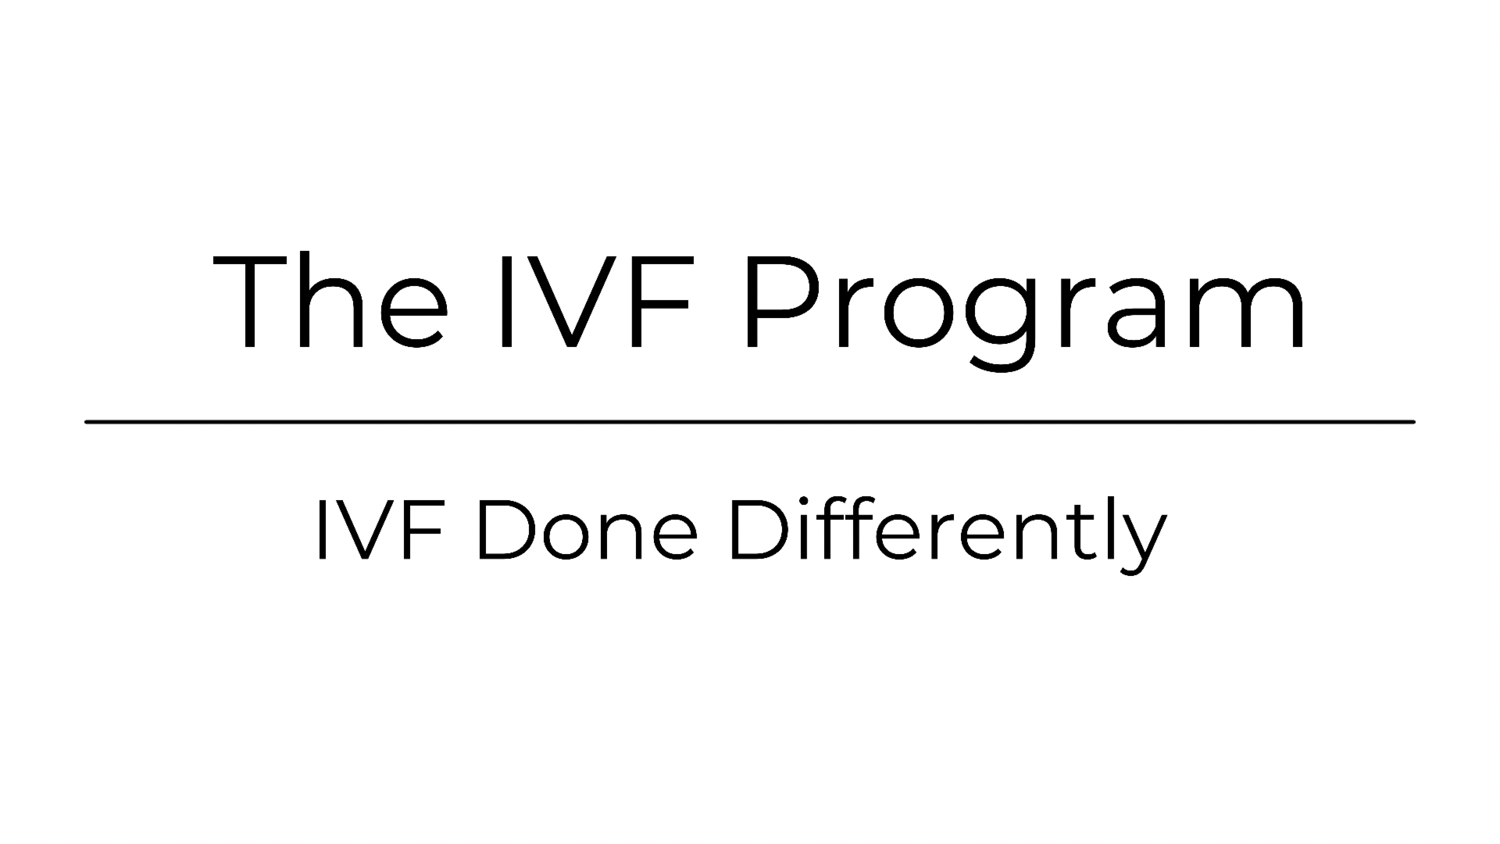 The IVF Program